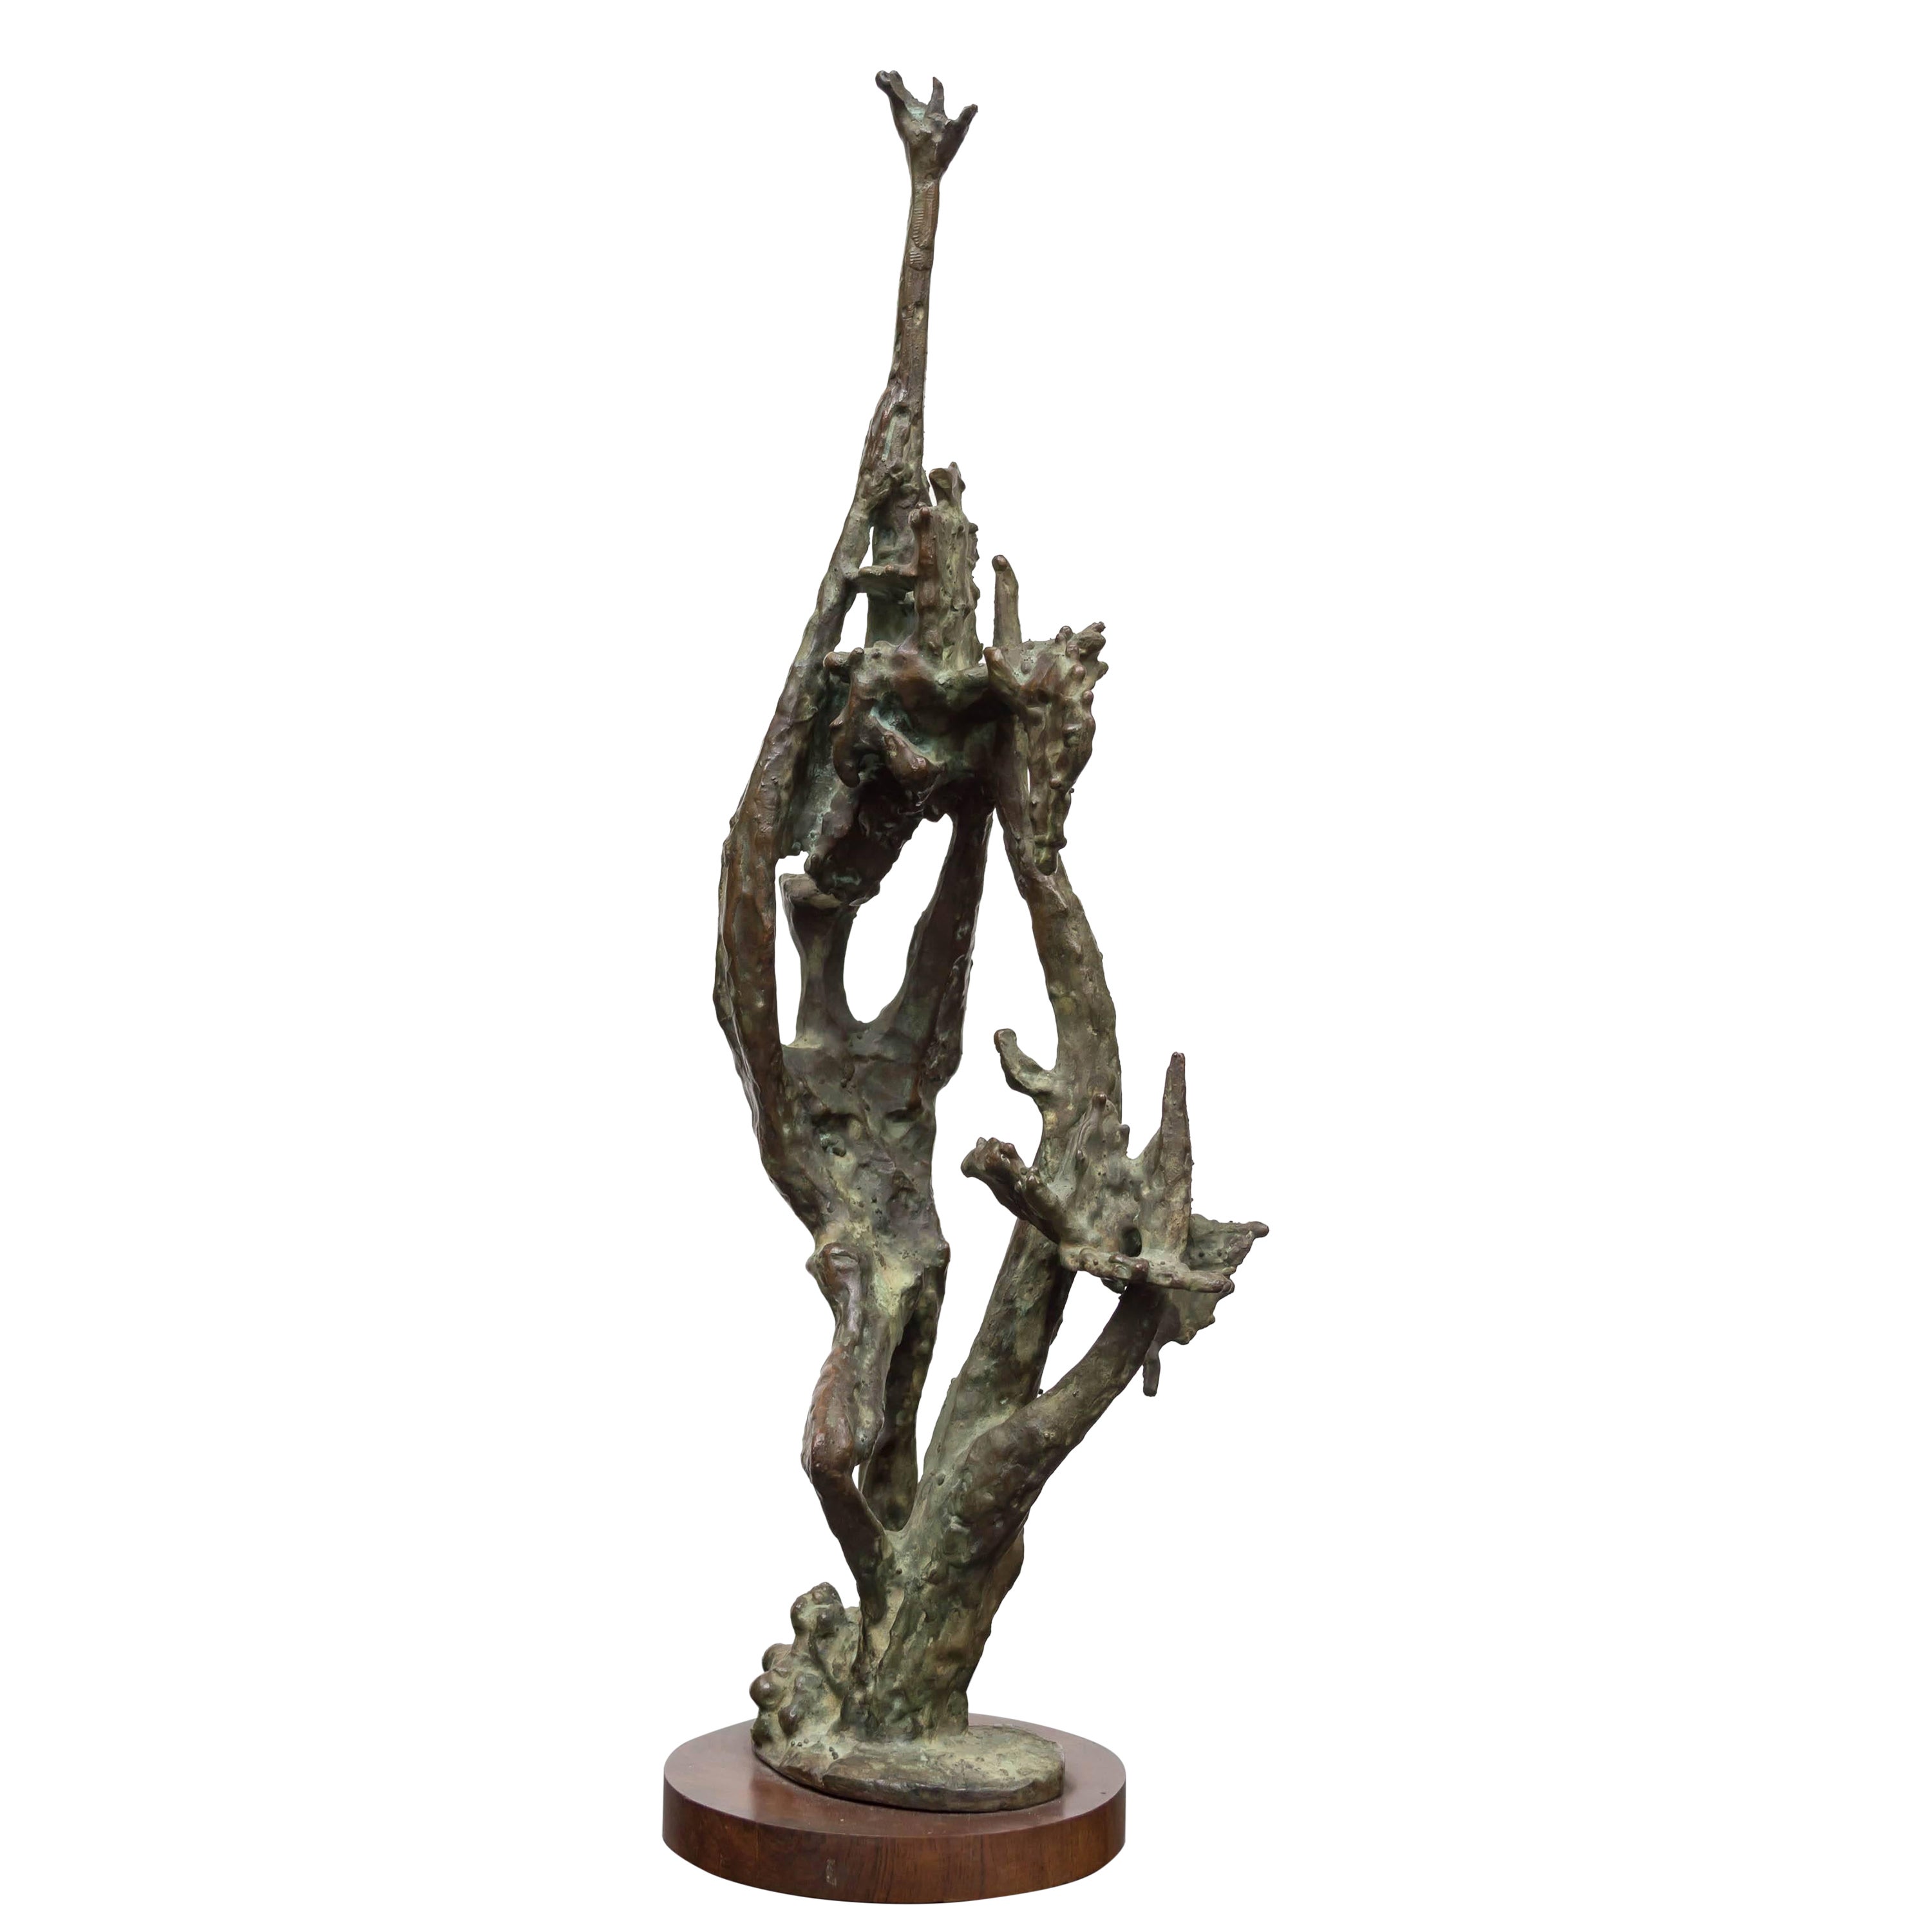 Abstract Bronze Figure titled "Fruit Picker" by Gurdon Woods S F, Bohemian Club